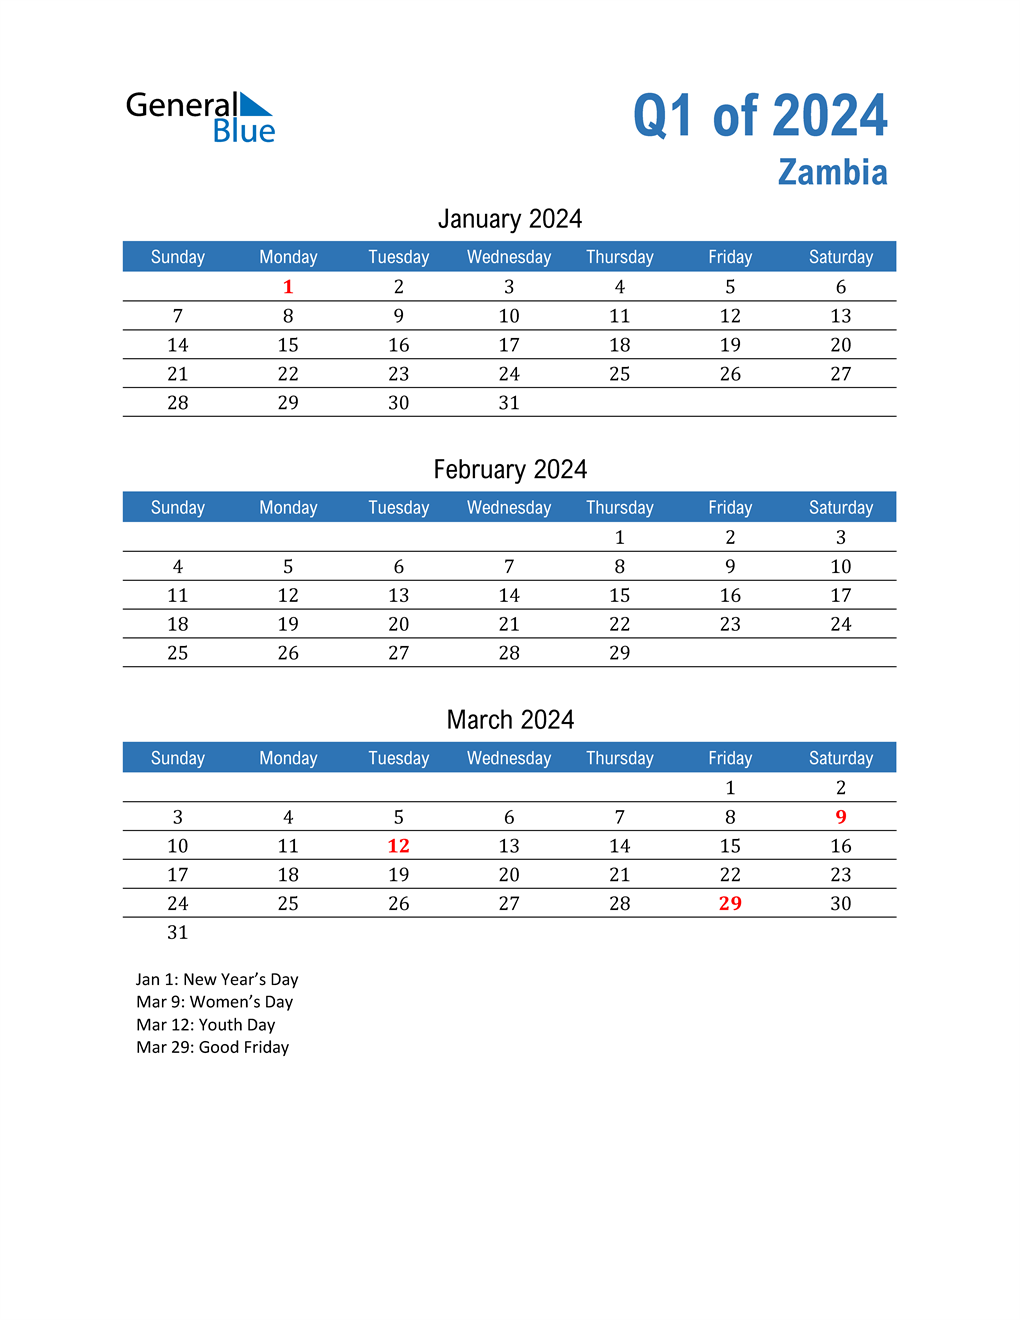 Q1 2024 Quarterly Calendar for Zambia